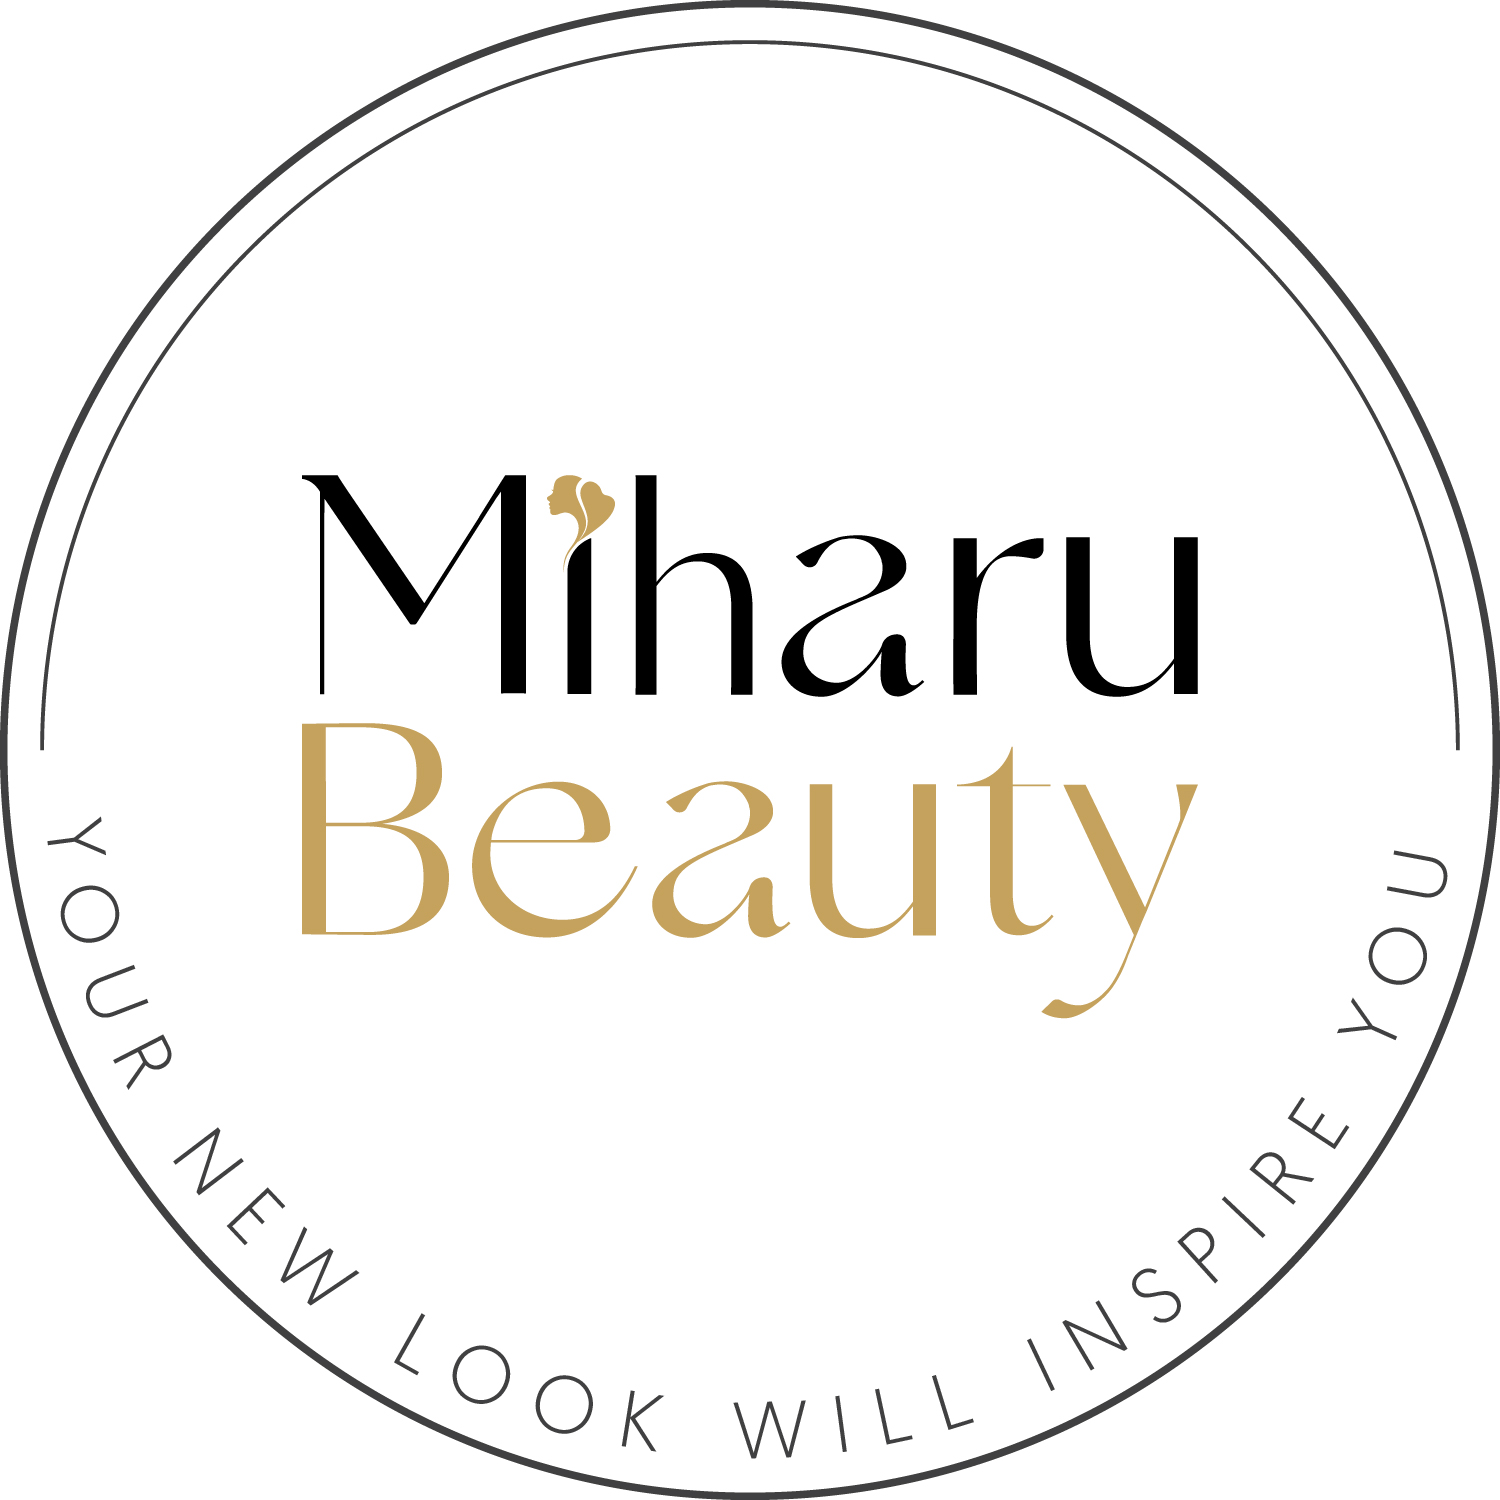 Miharu Beauty